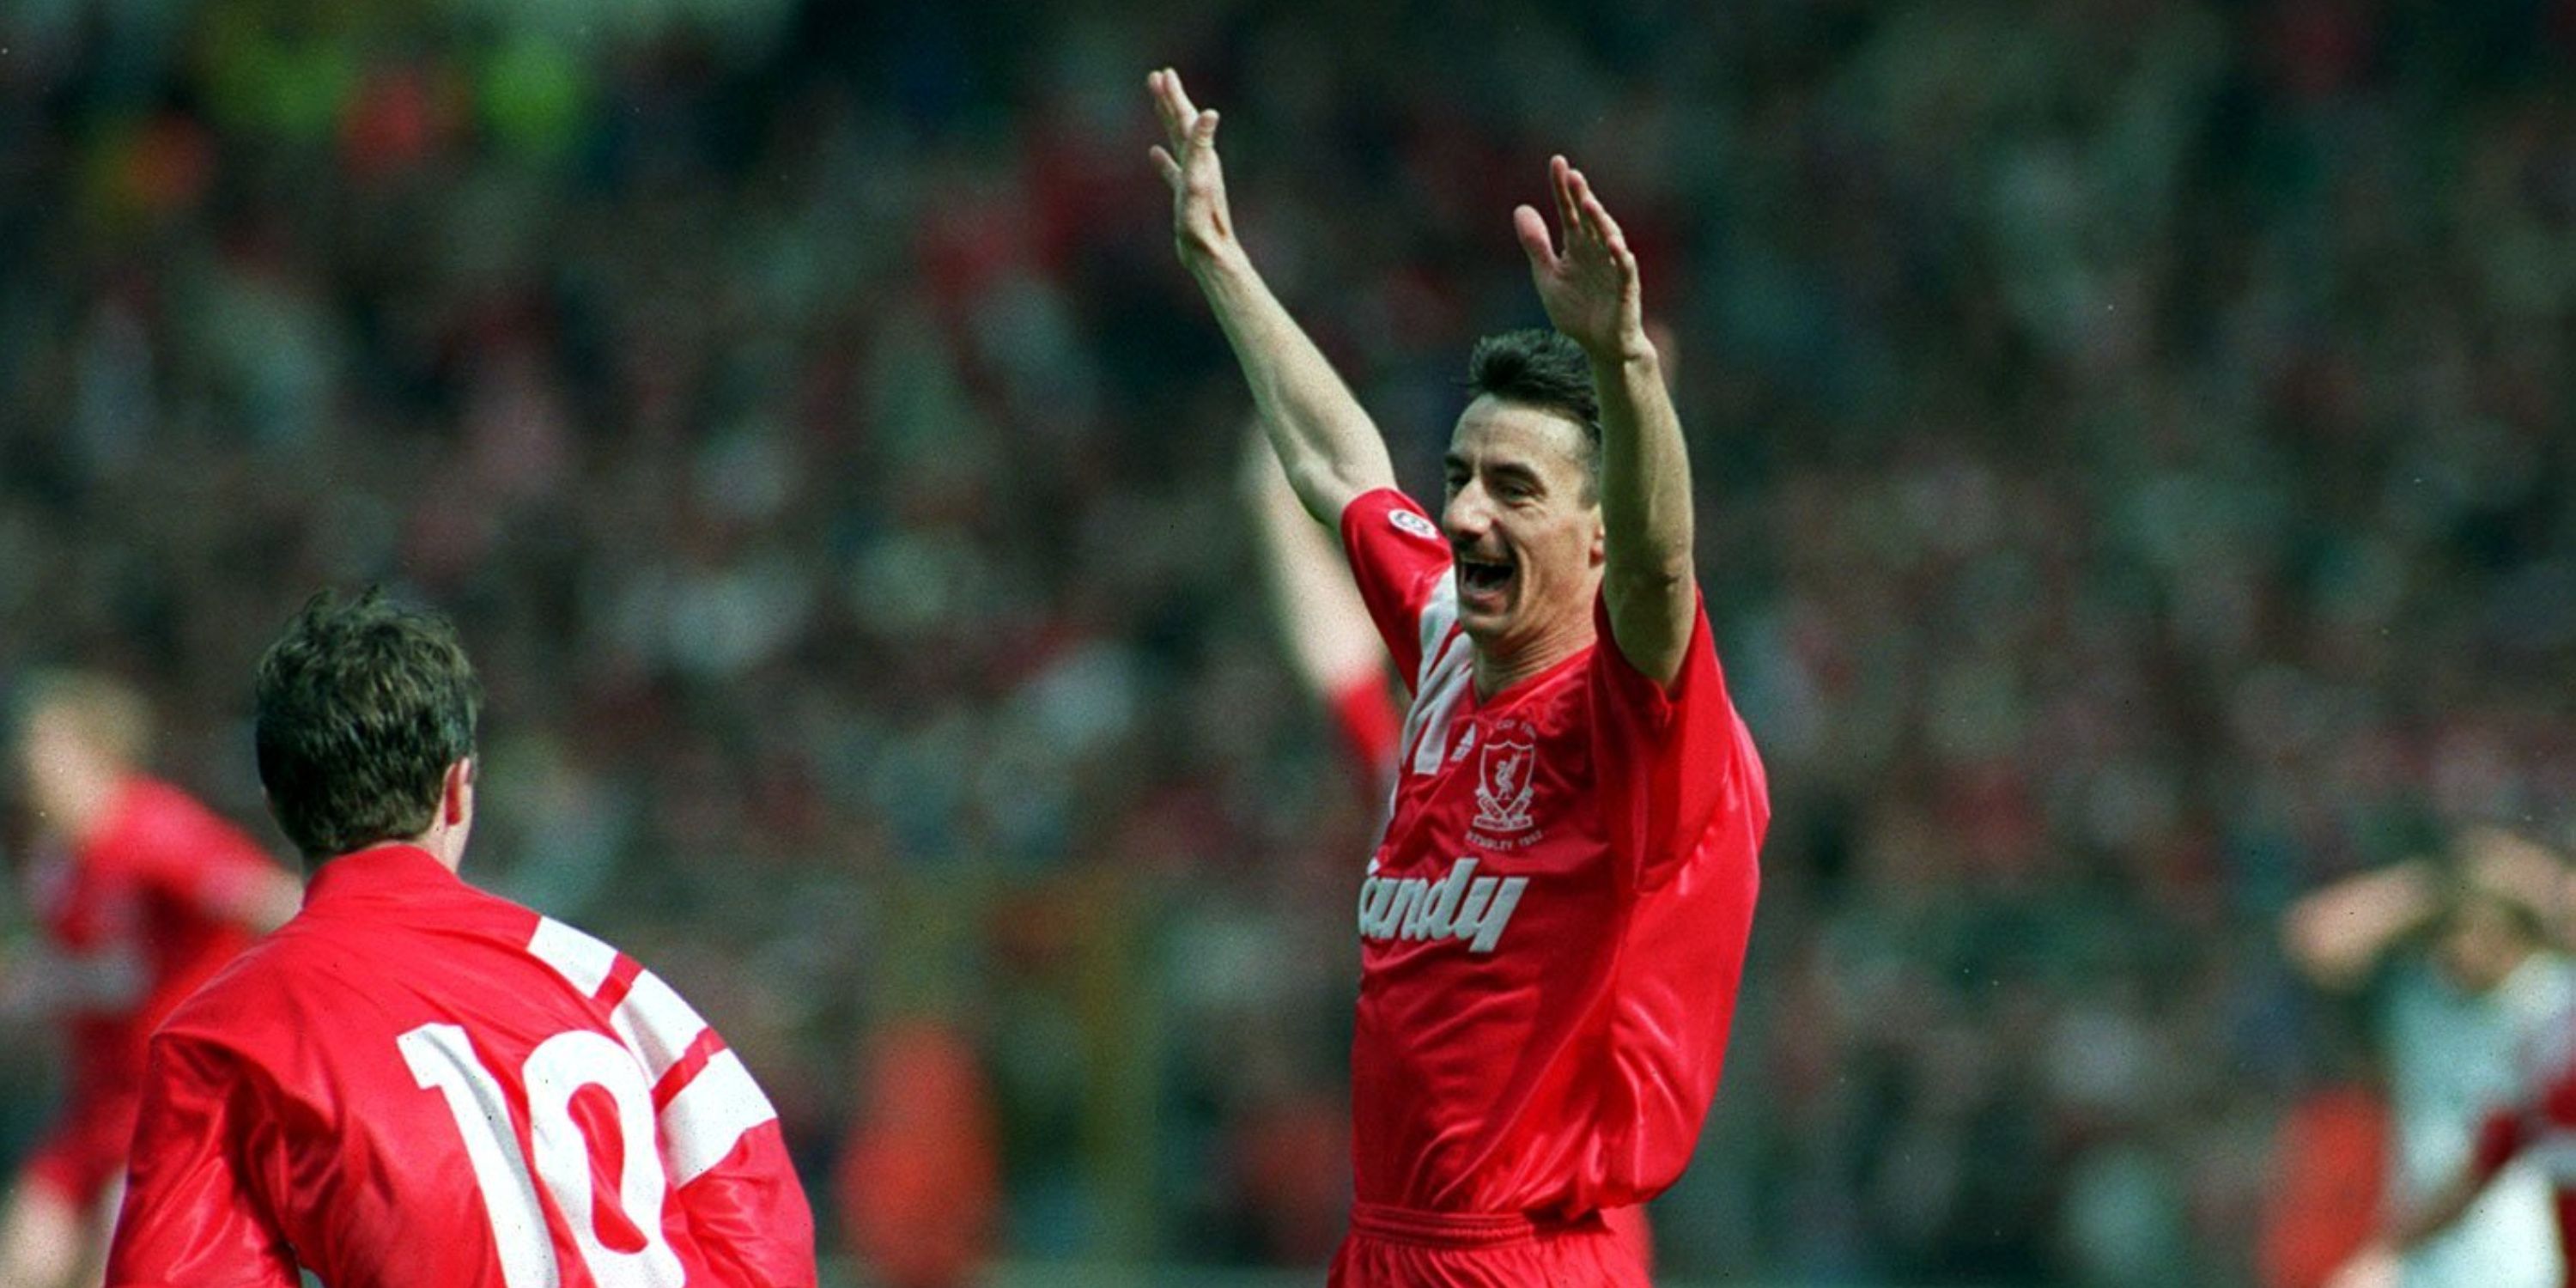 Ian Rush celebrating a goal for Liverpool